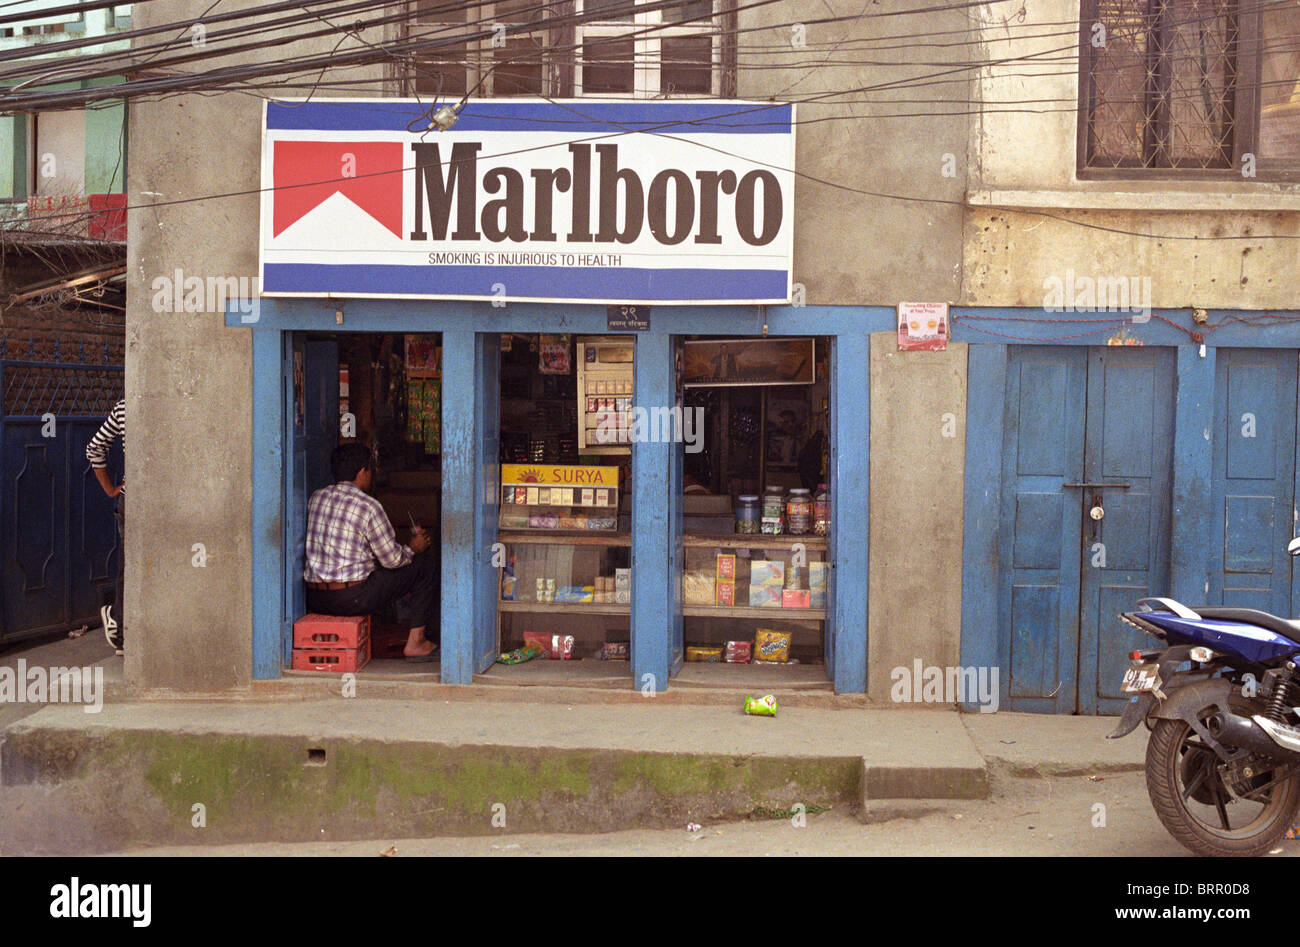 Marlboro sign above a Kathmandu shop front. Stock Photo